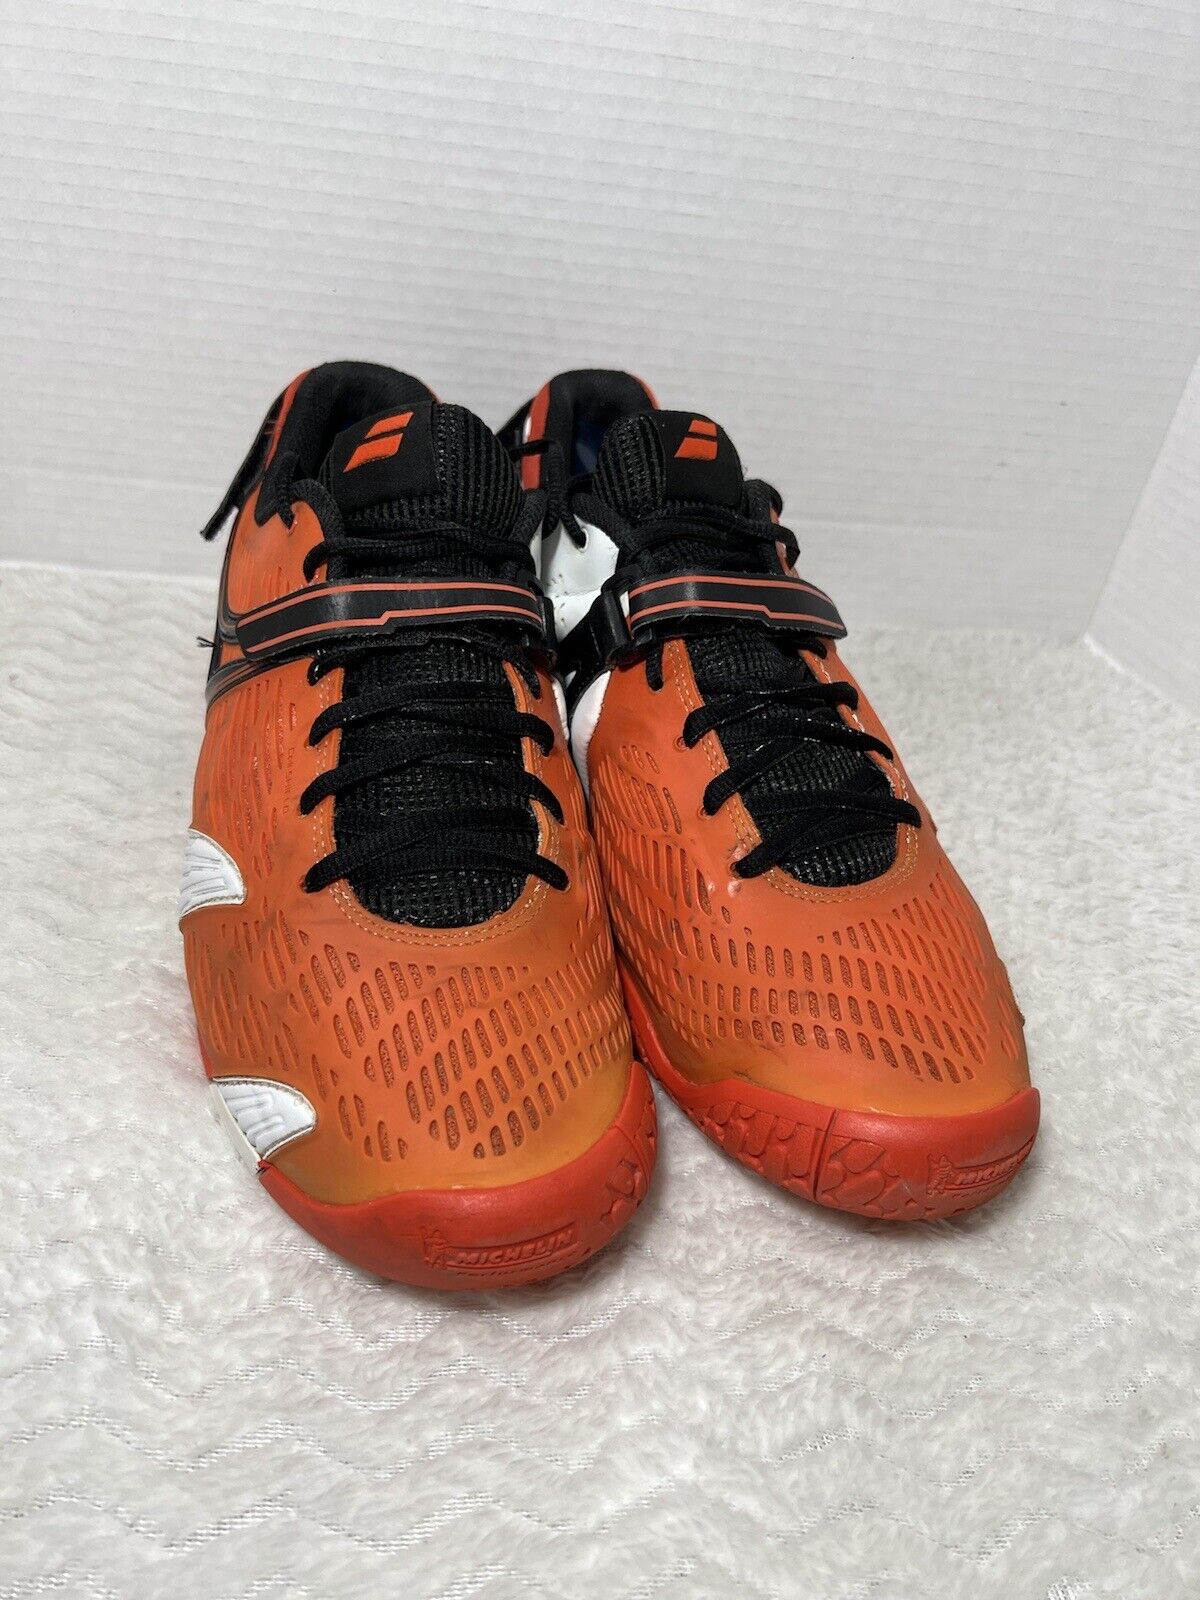 Babolat Propulse Kompressor All Court Tennis Shoes, Orange 30s1372 Men’s Size 11